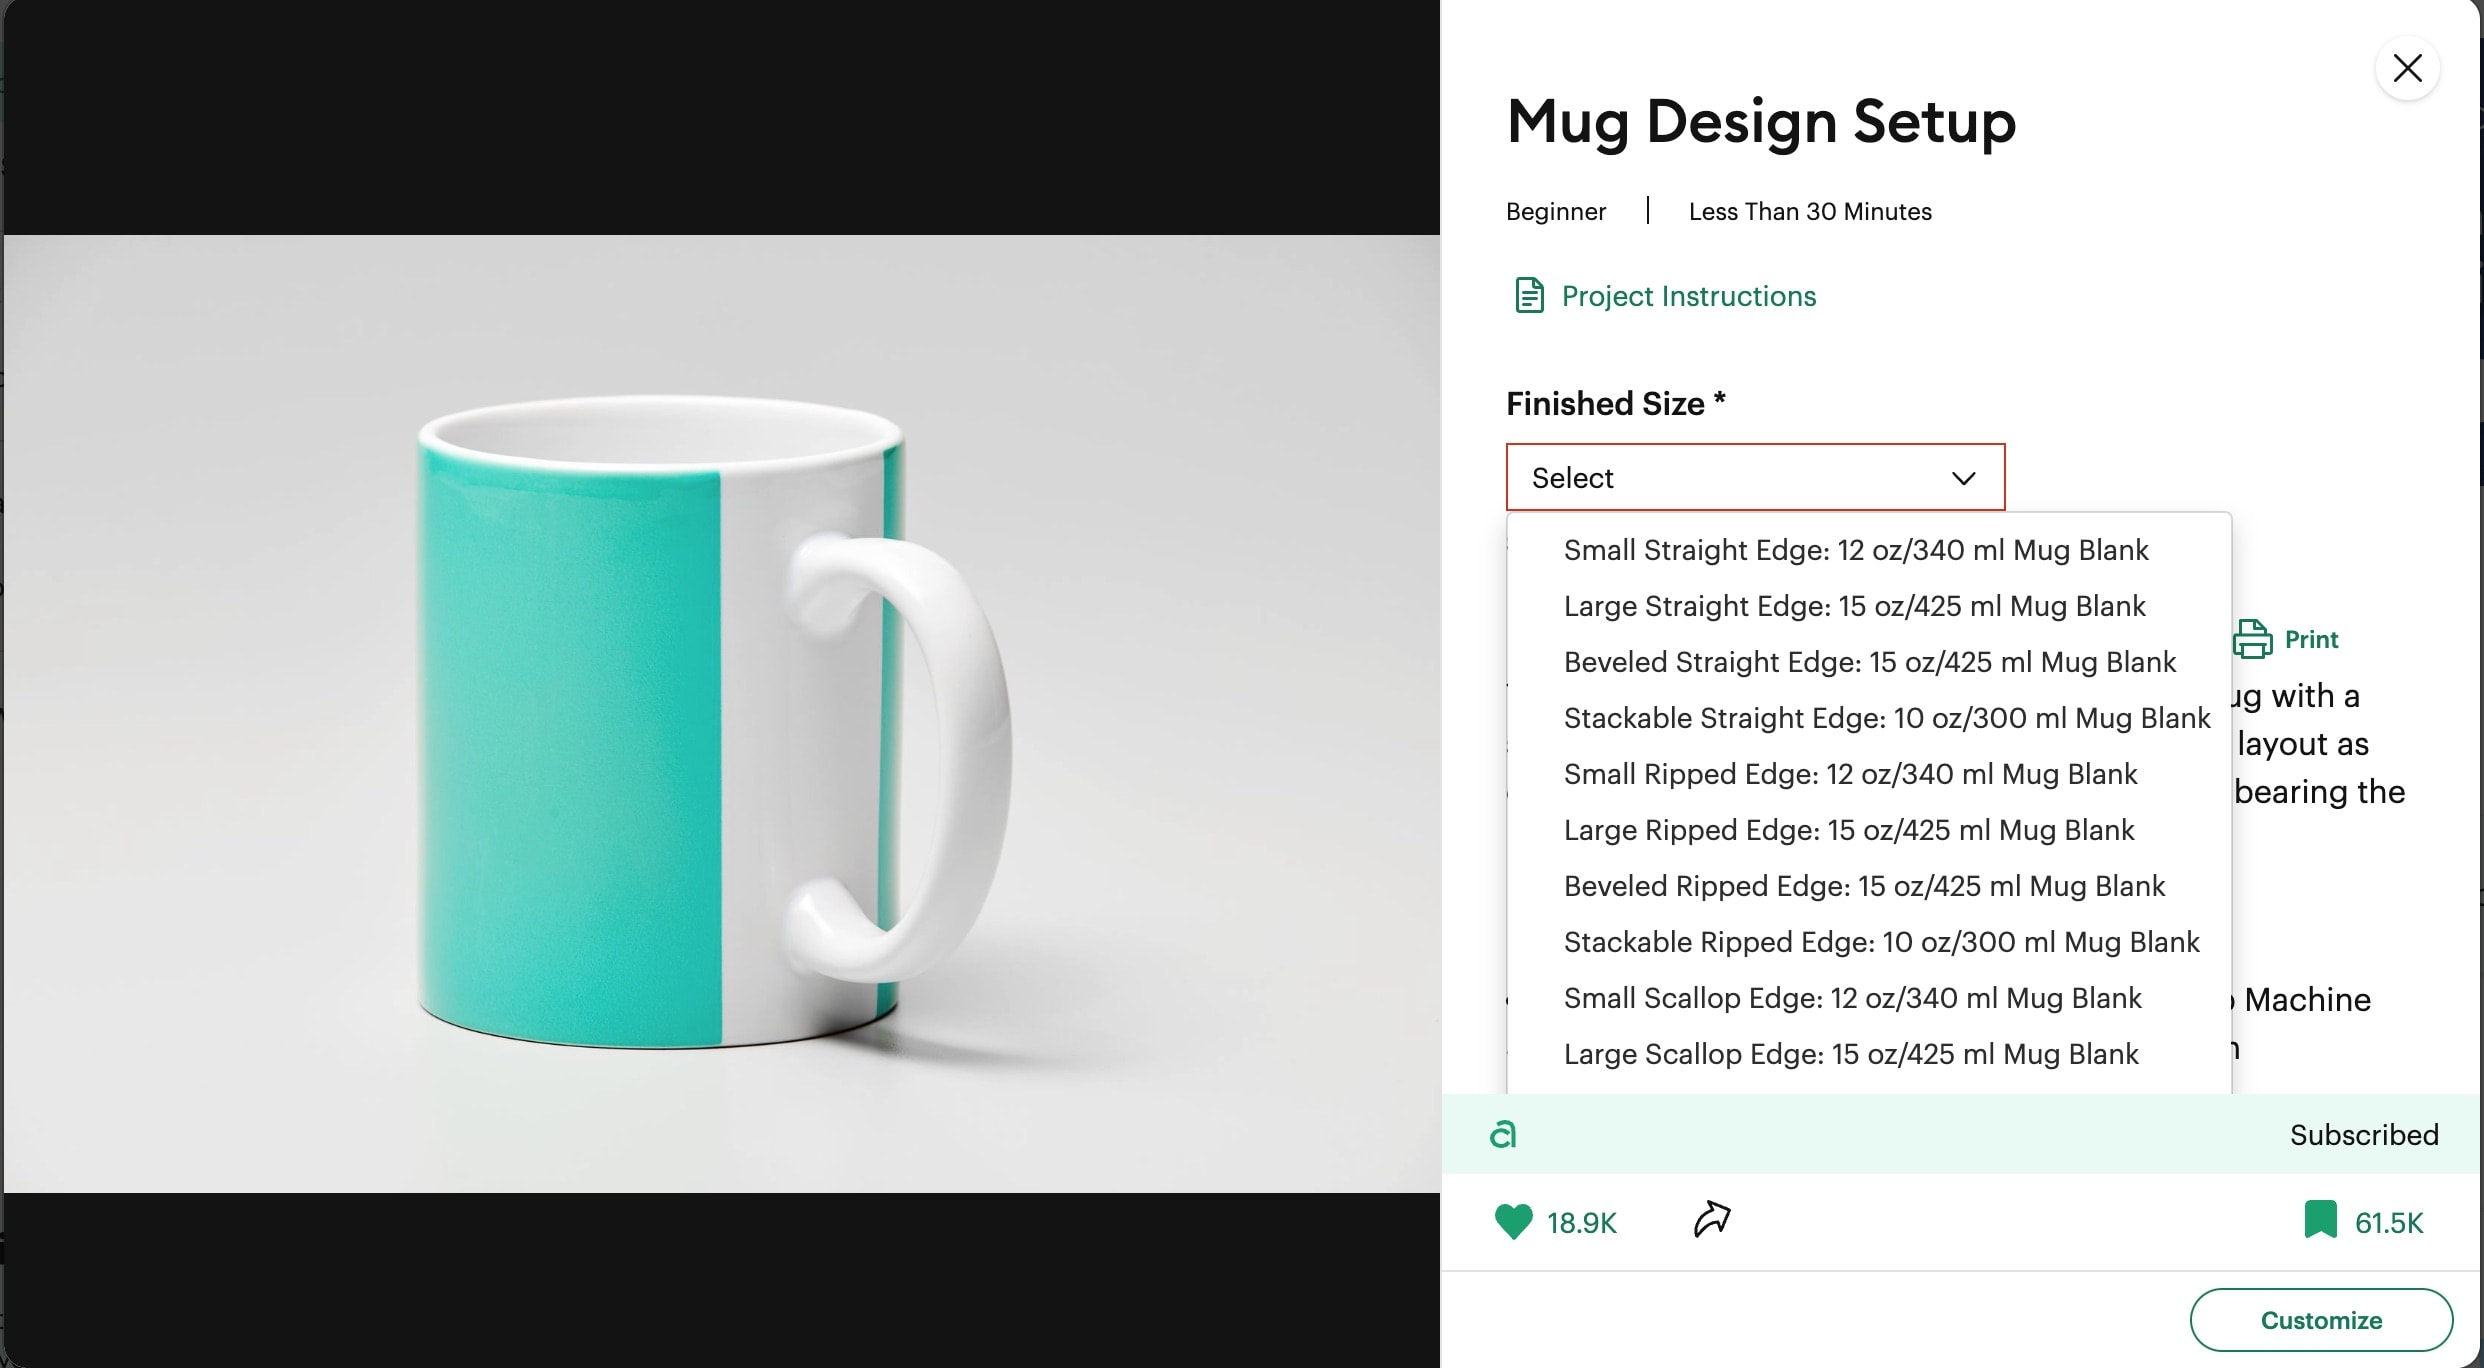 Cricut mug design setup with mug templates for various mug sizes and styles in Cricut Design Space software.